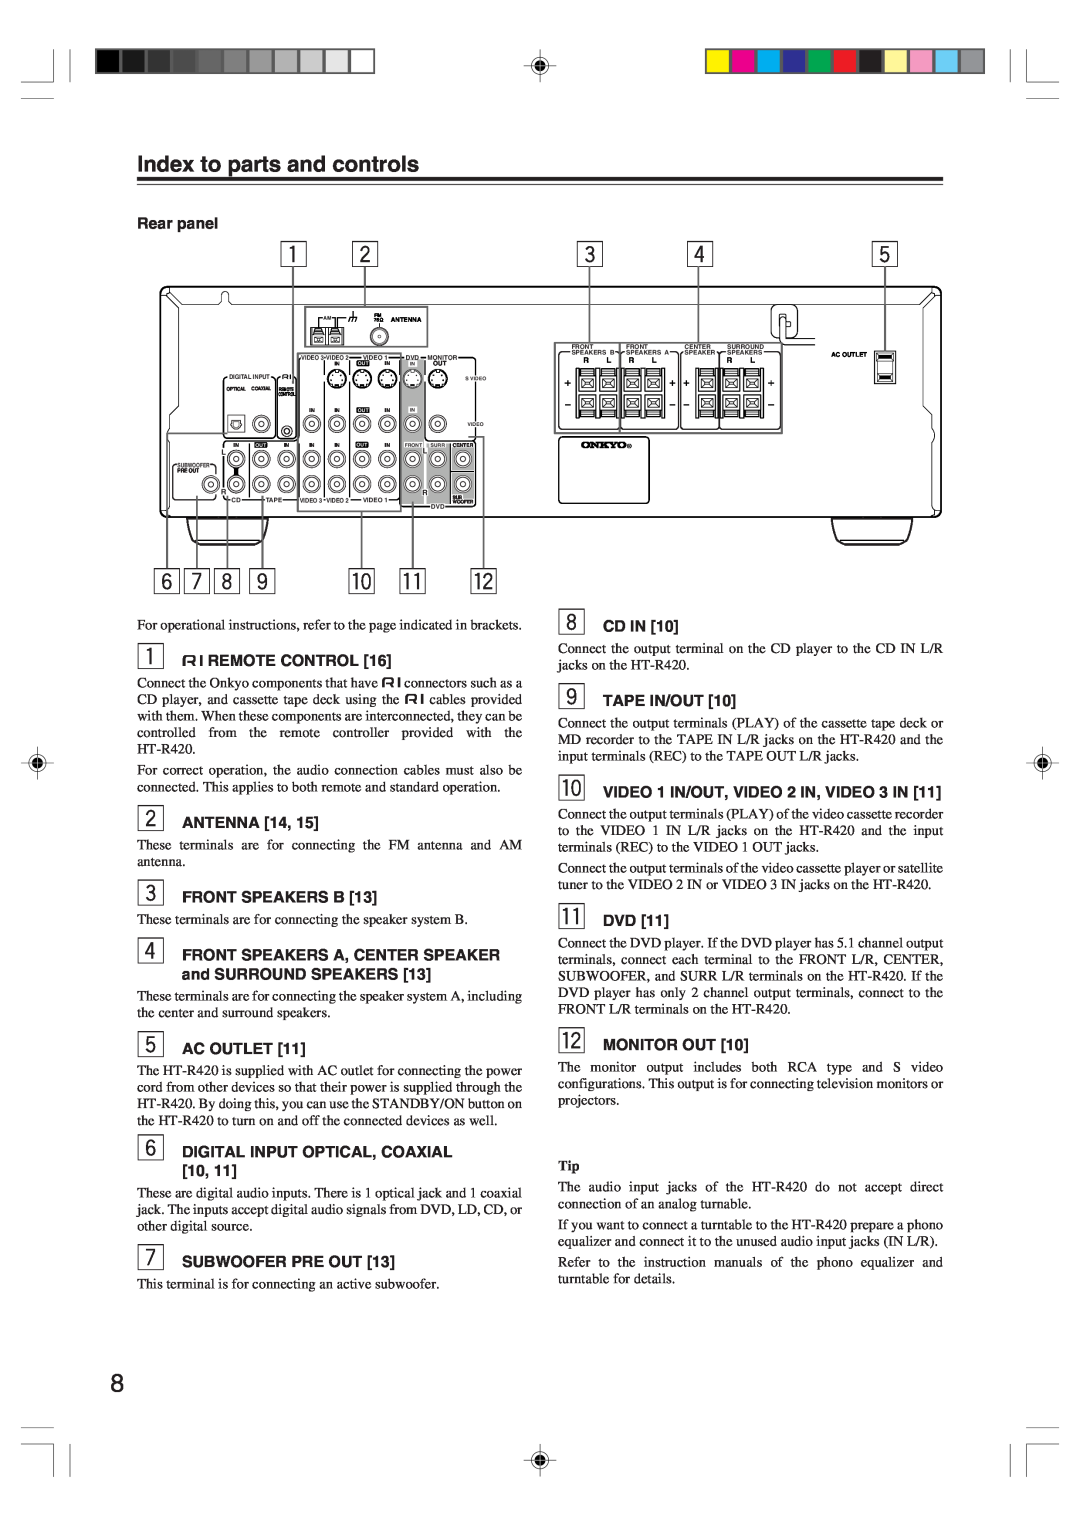 Onkyo HT-R420 appendix 6 7 8 9 p q w, Index to parts and controls 